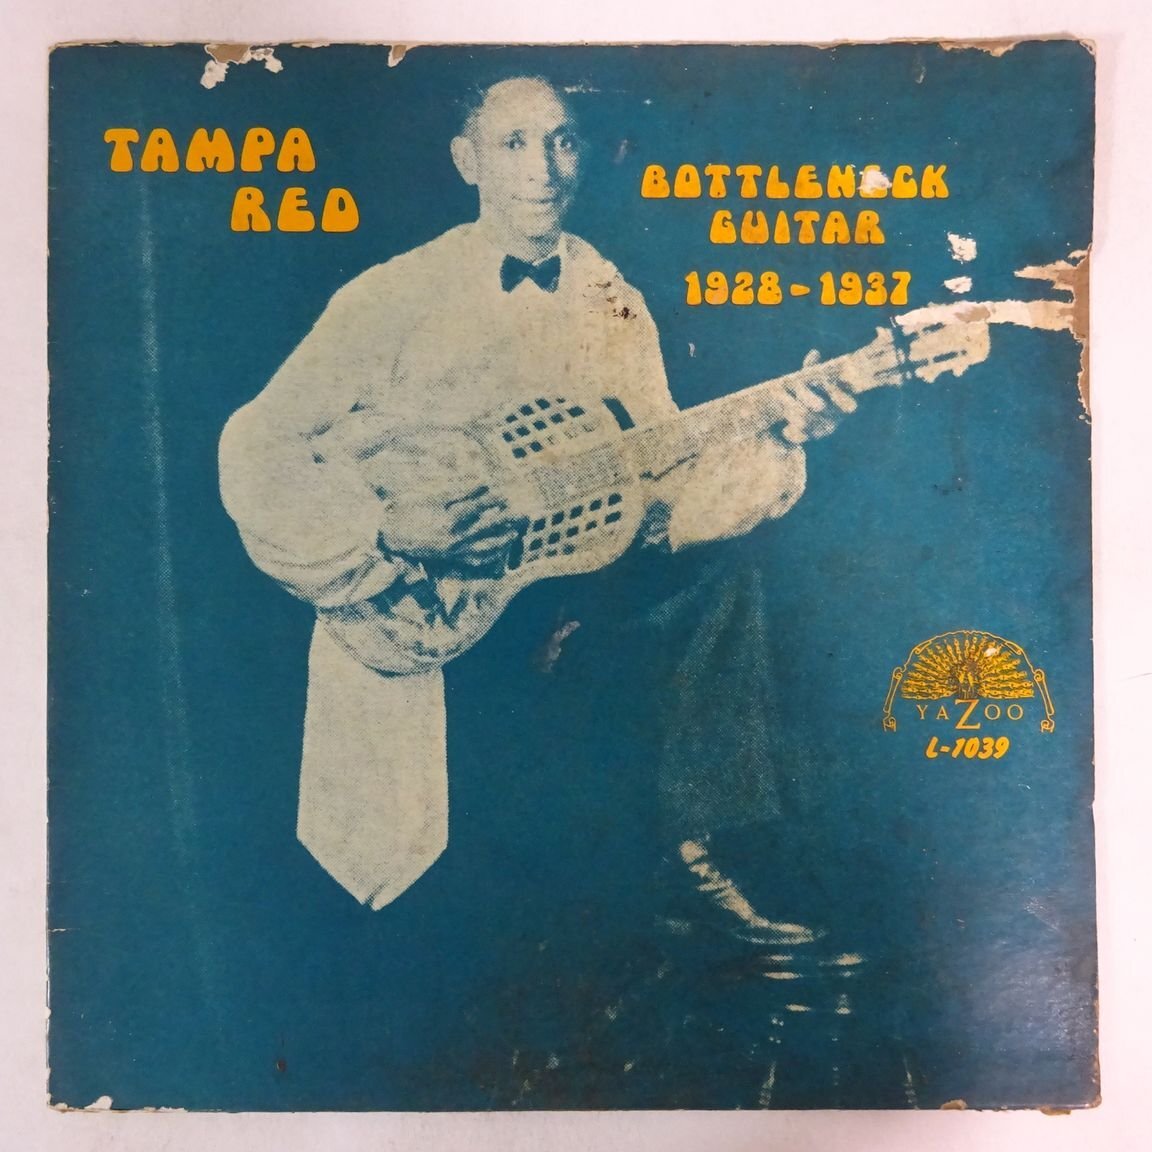 14030616;【US盤/YAZOO/深溝】Tampa Red / Bottleneck Guitar 1928-1937の画像1